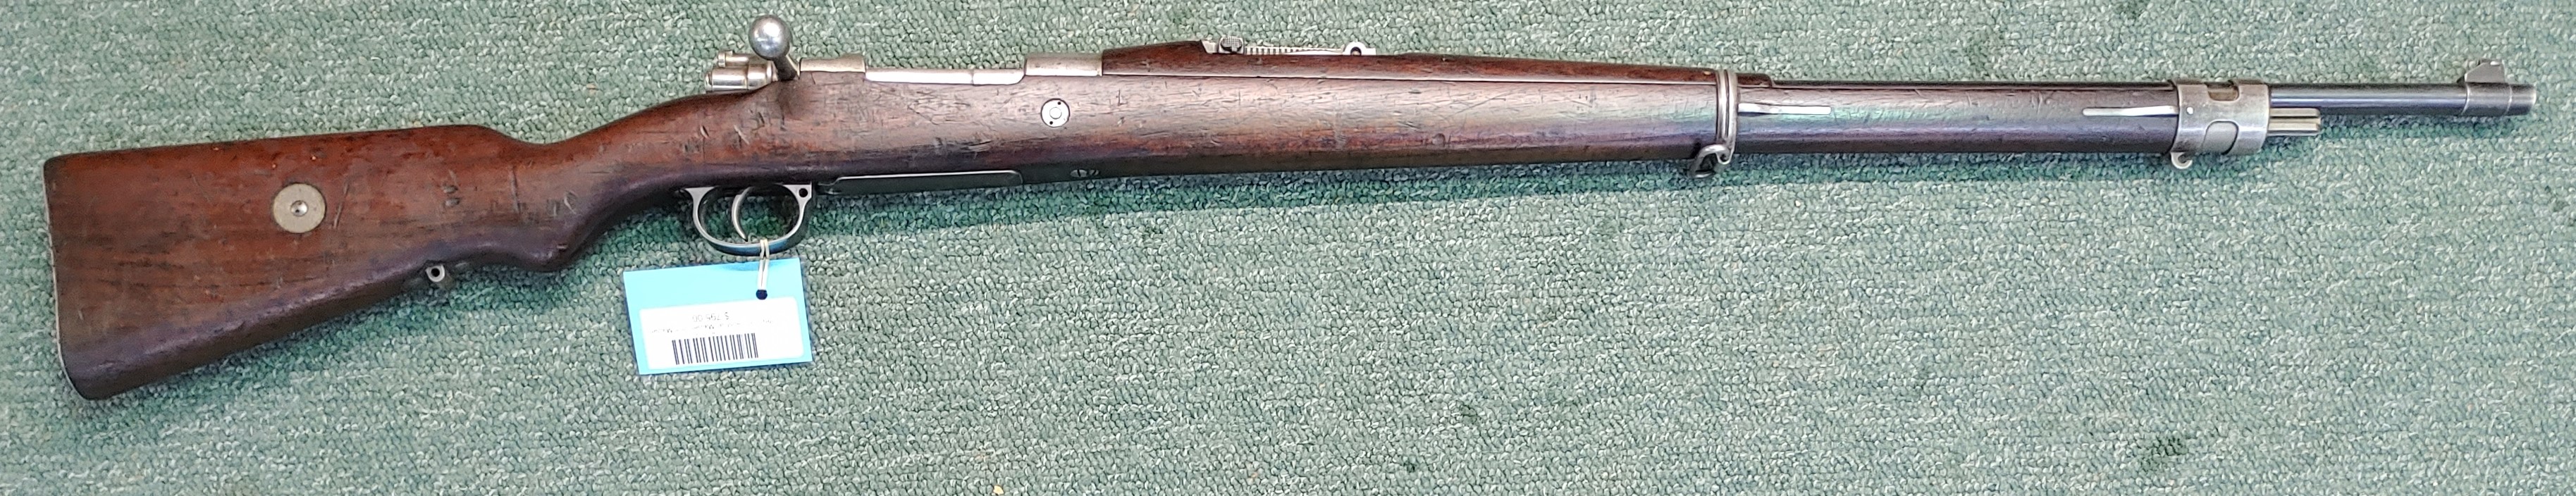 Steyr Austrian Mauser 7mm Mauser